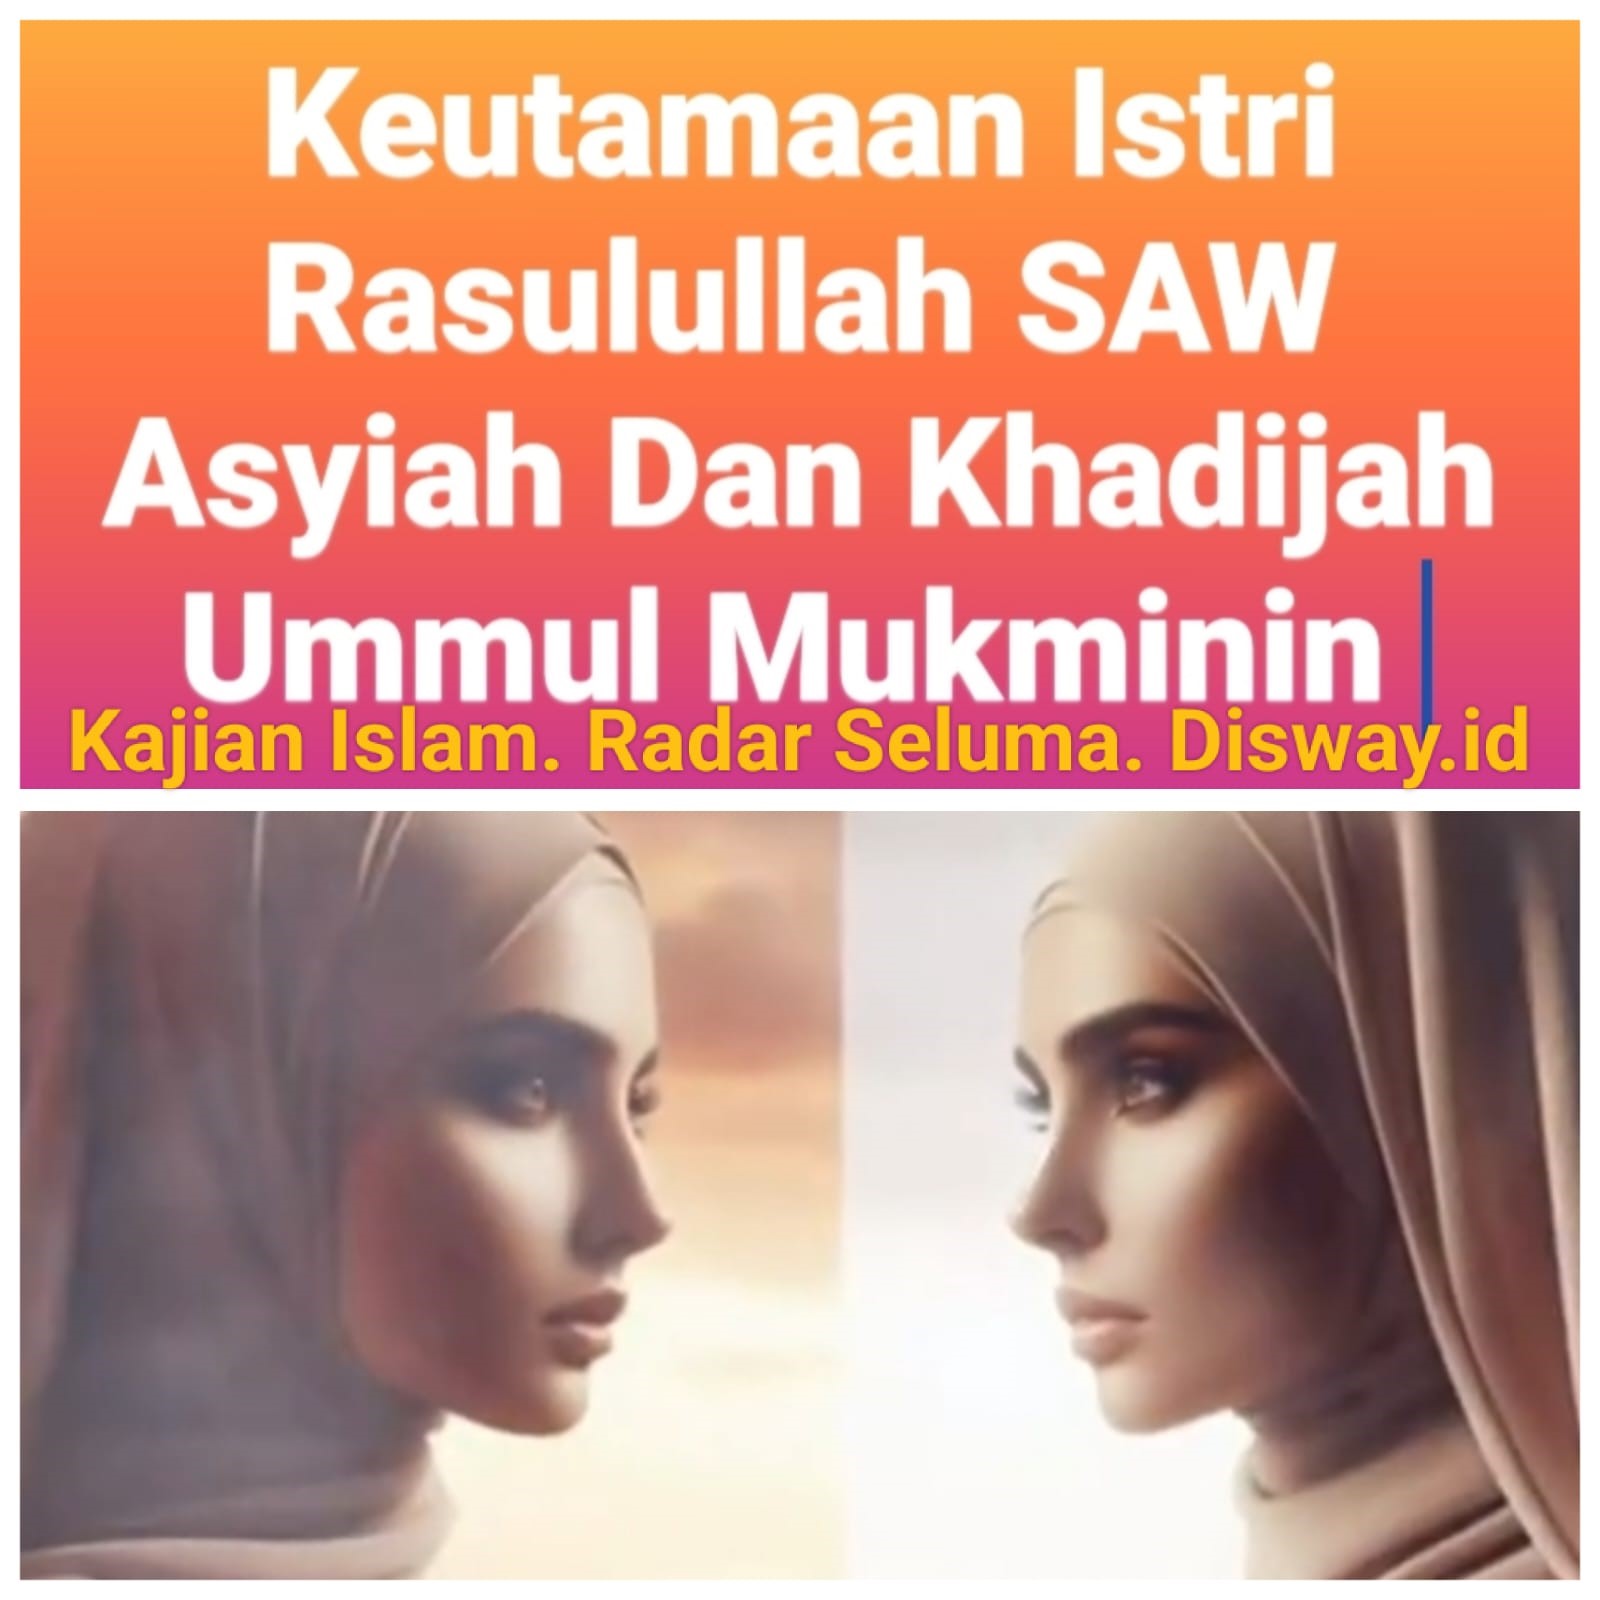 Siapakah Lebih Utama Antara Aisyah dan Khadijah Istri Rasulullah SAW